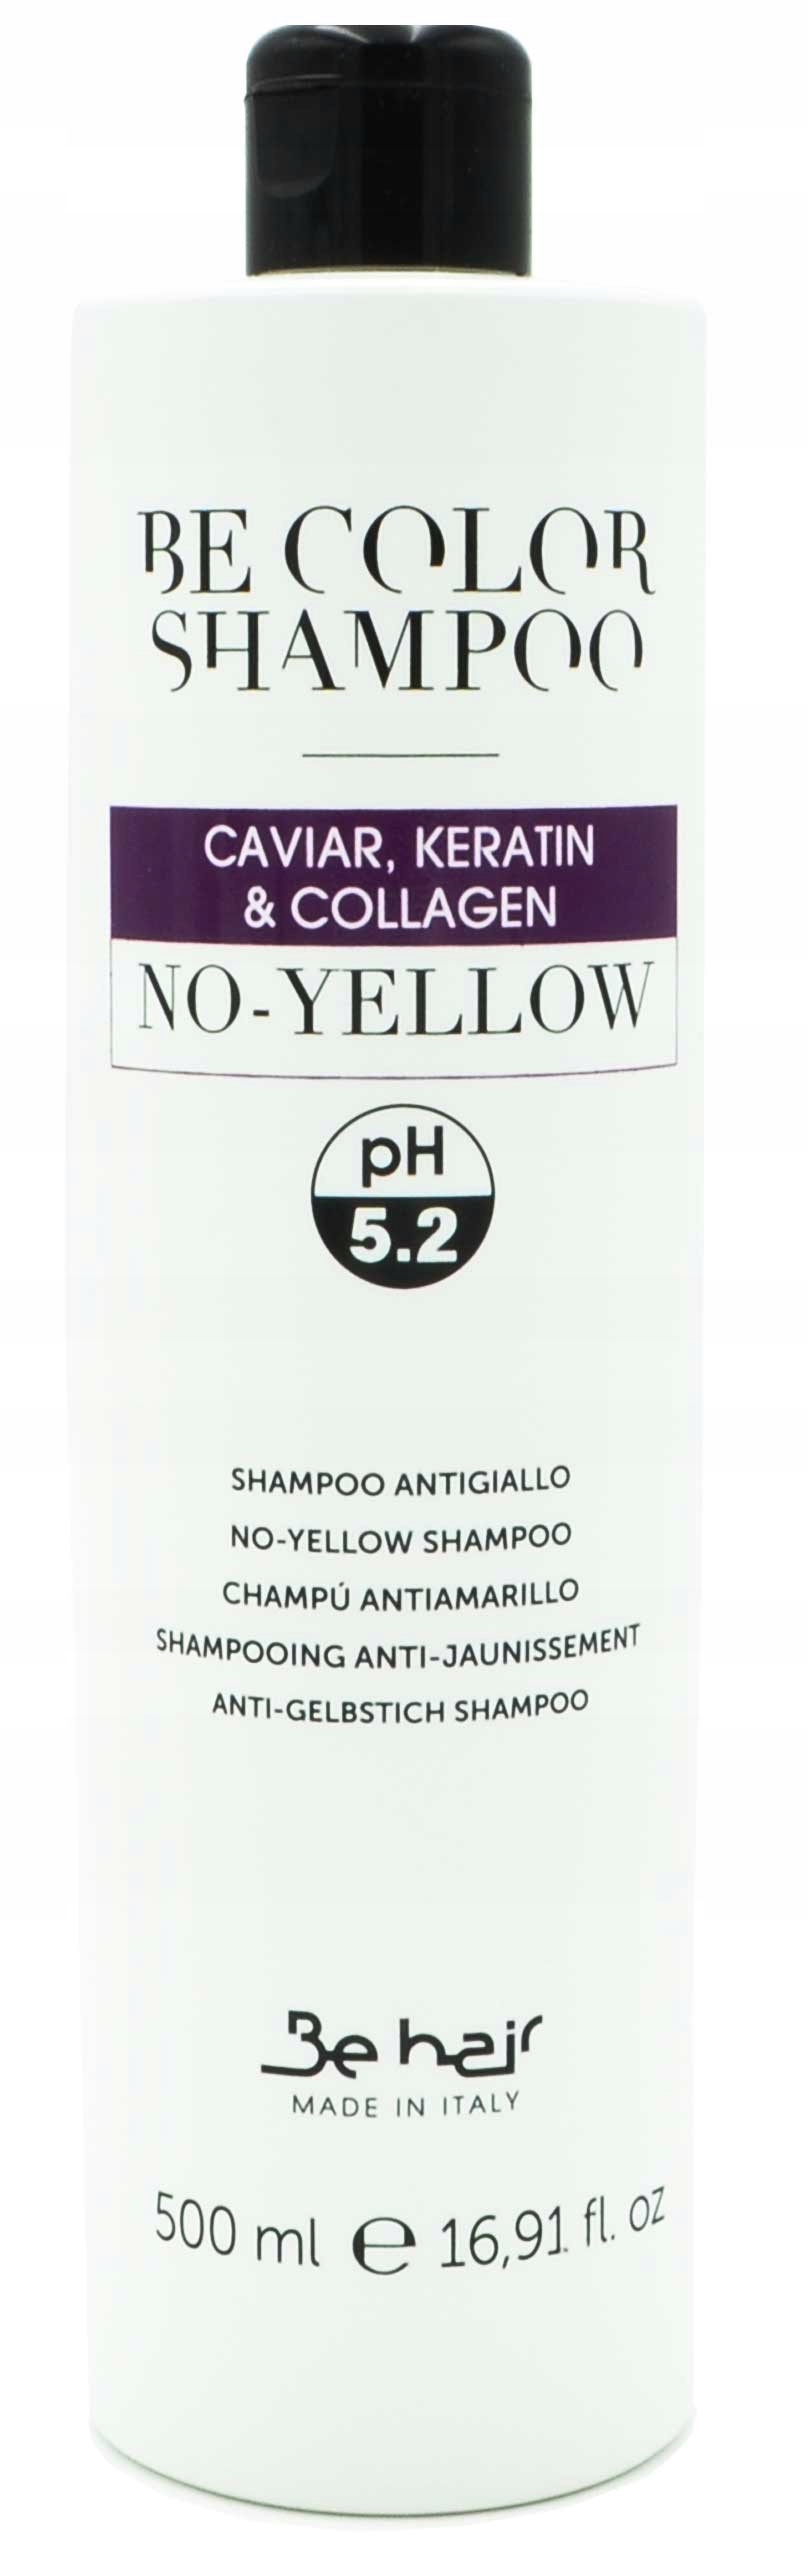 szampon be color ph 5.5